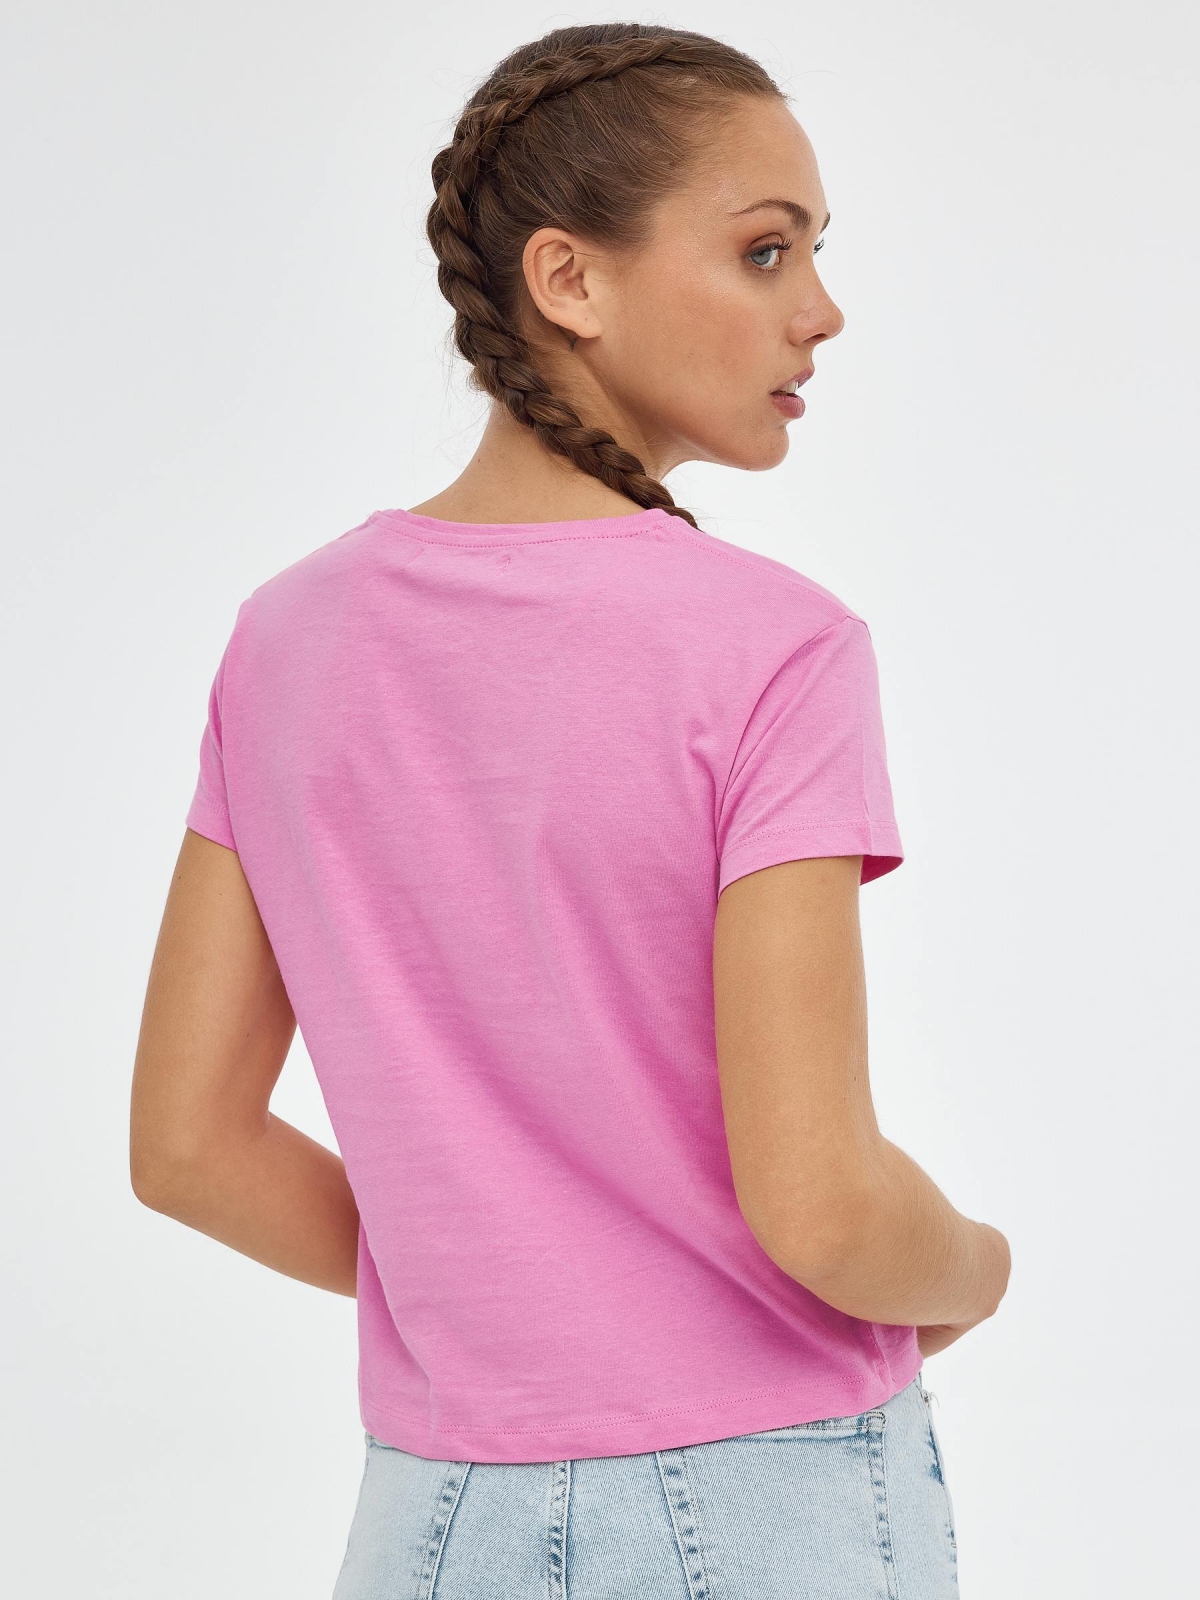 T-shirt Sunshine rosa vista meia traseira